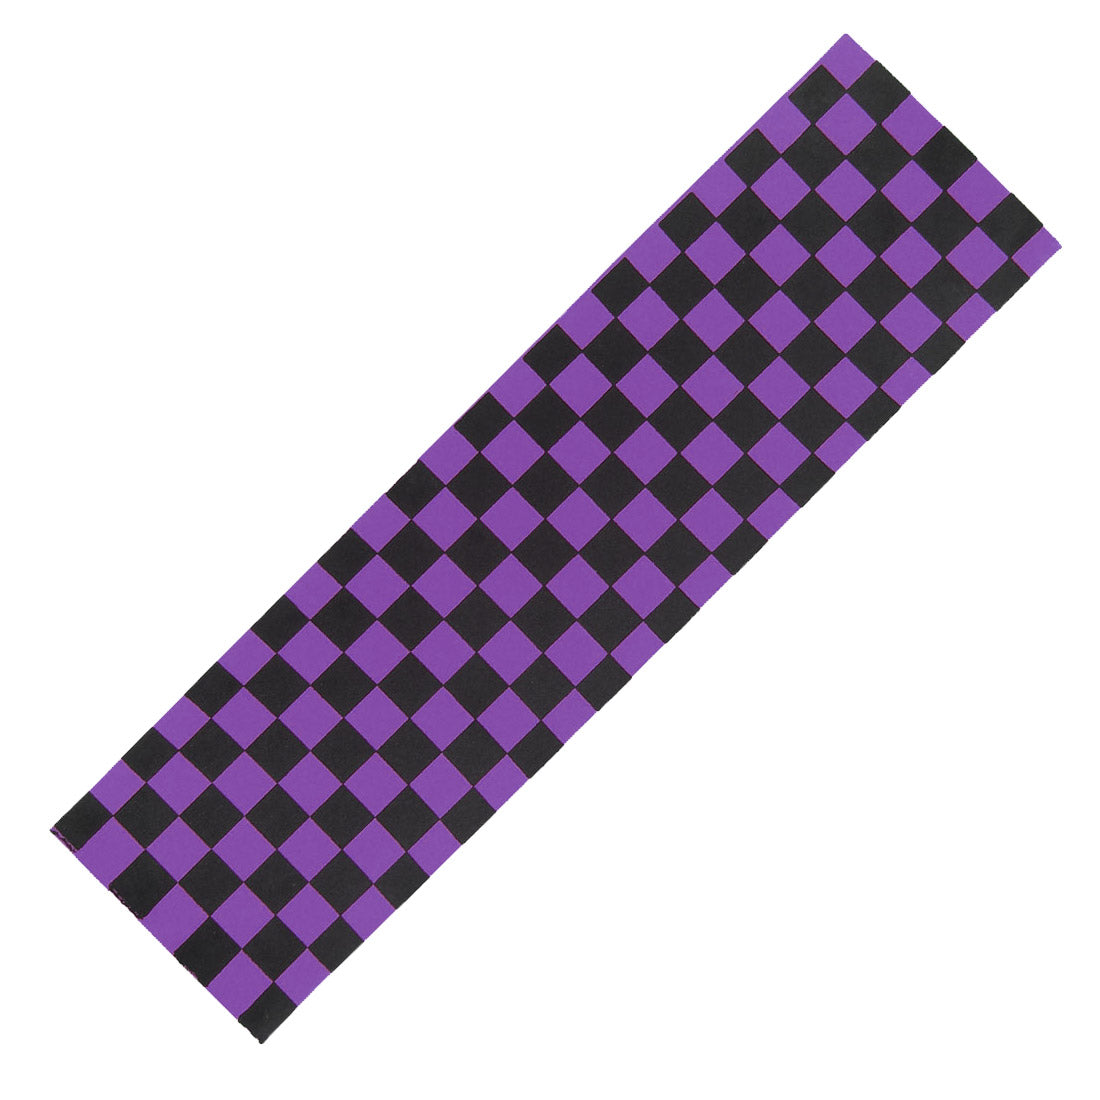 Fruity Griptape - Checkered Black Purple Check Griptape